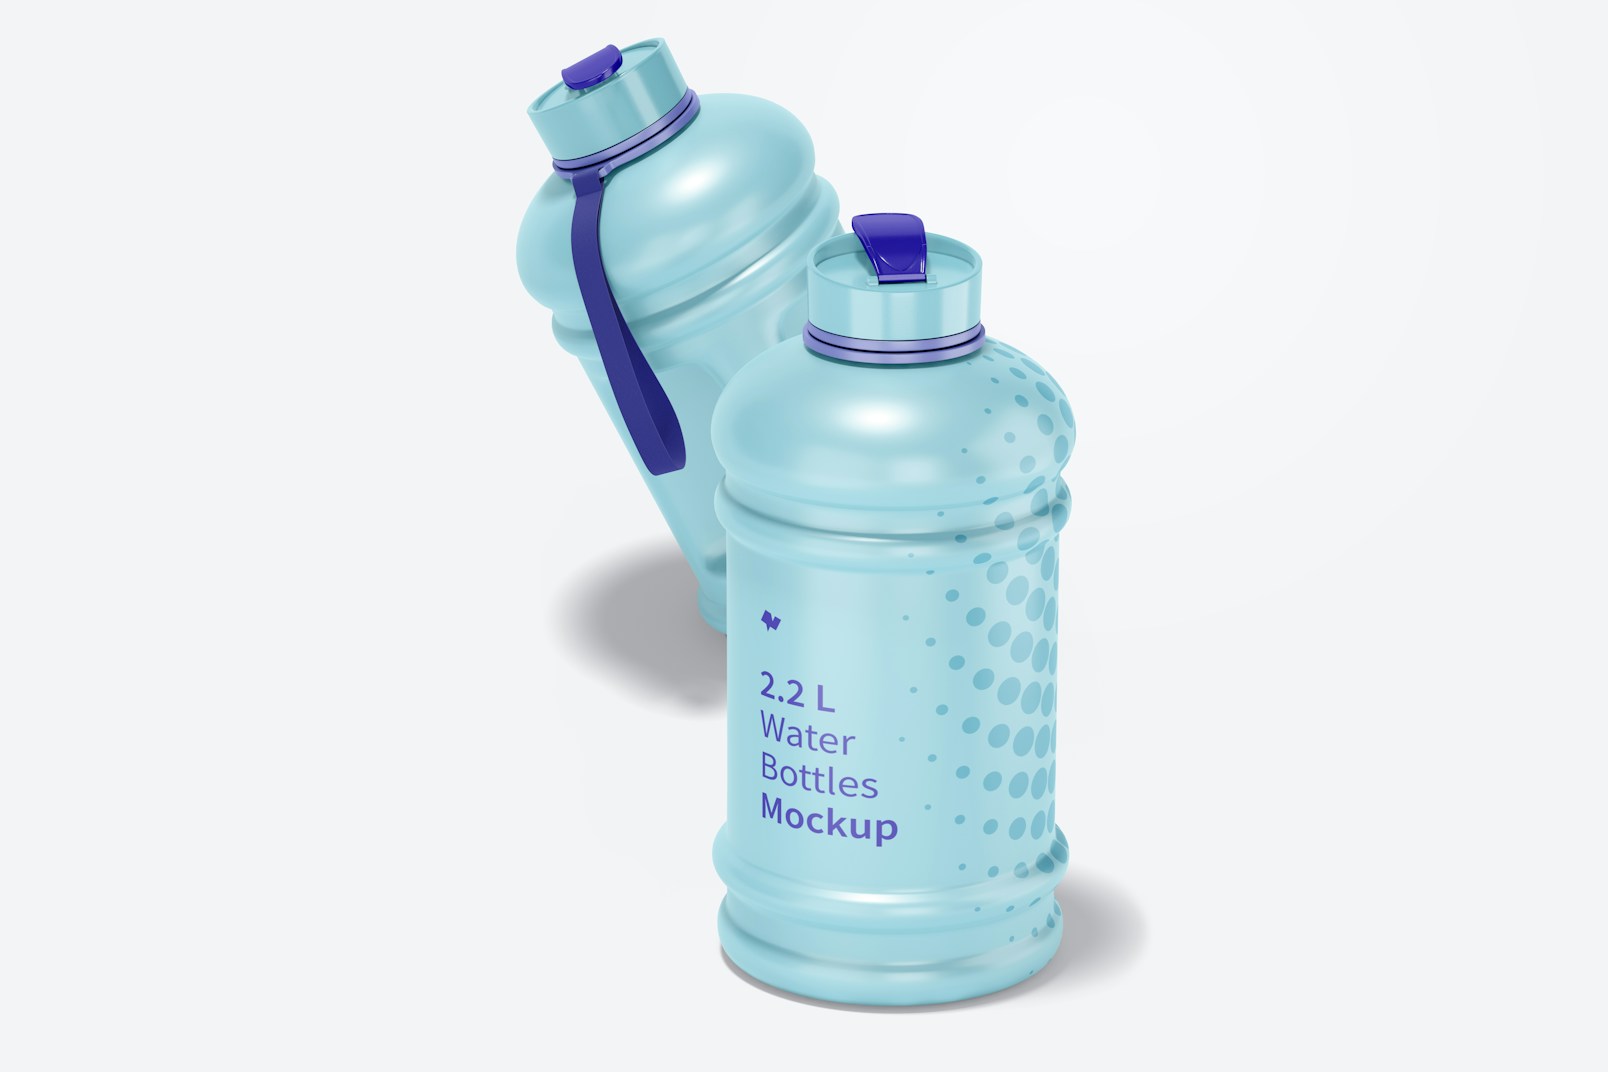 Maqueta de Botellas de Agua de 2.2 L